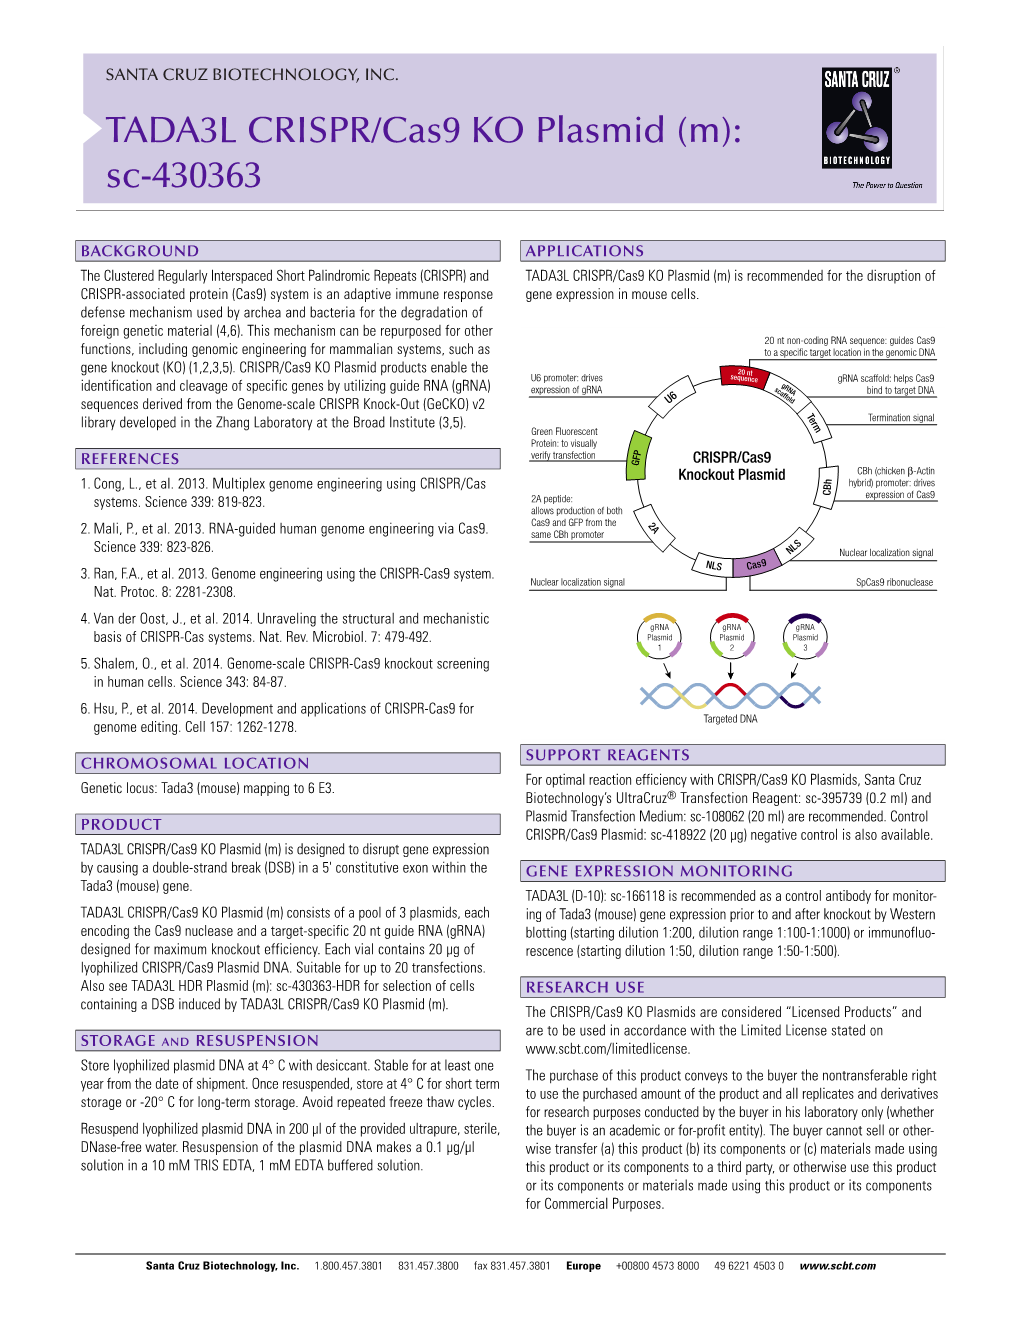 TADA3L CRISPR/Cas9 KO Plasmid (M): Sc-430363